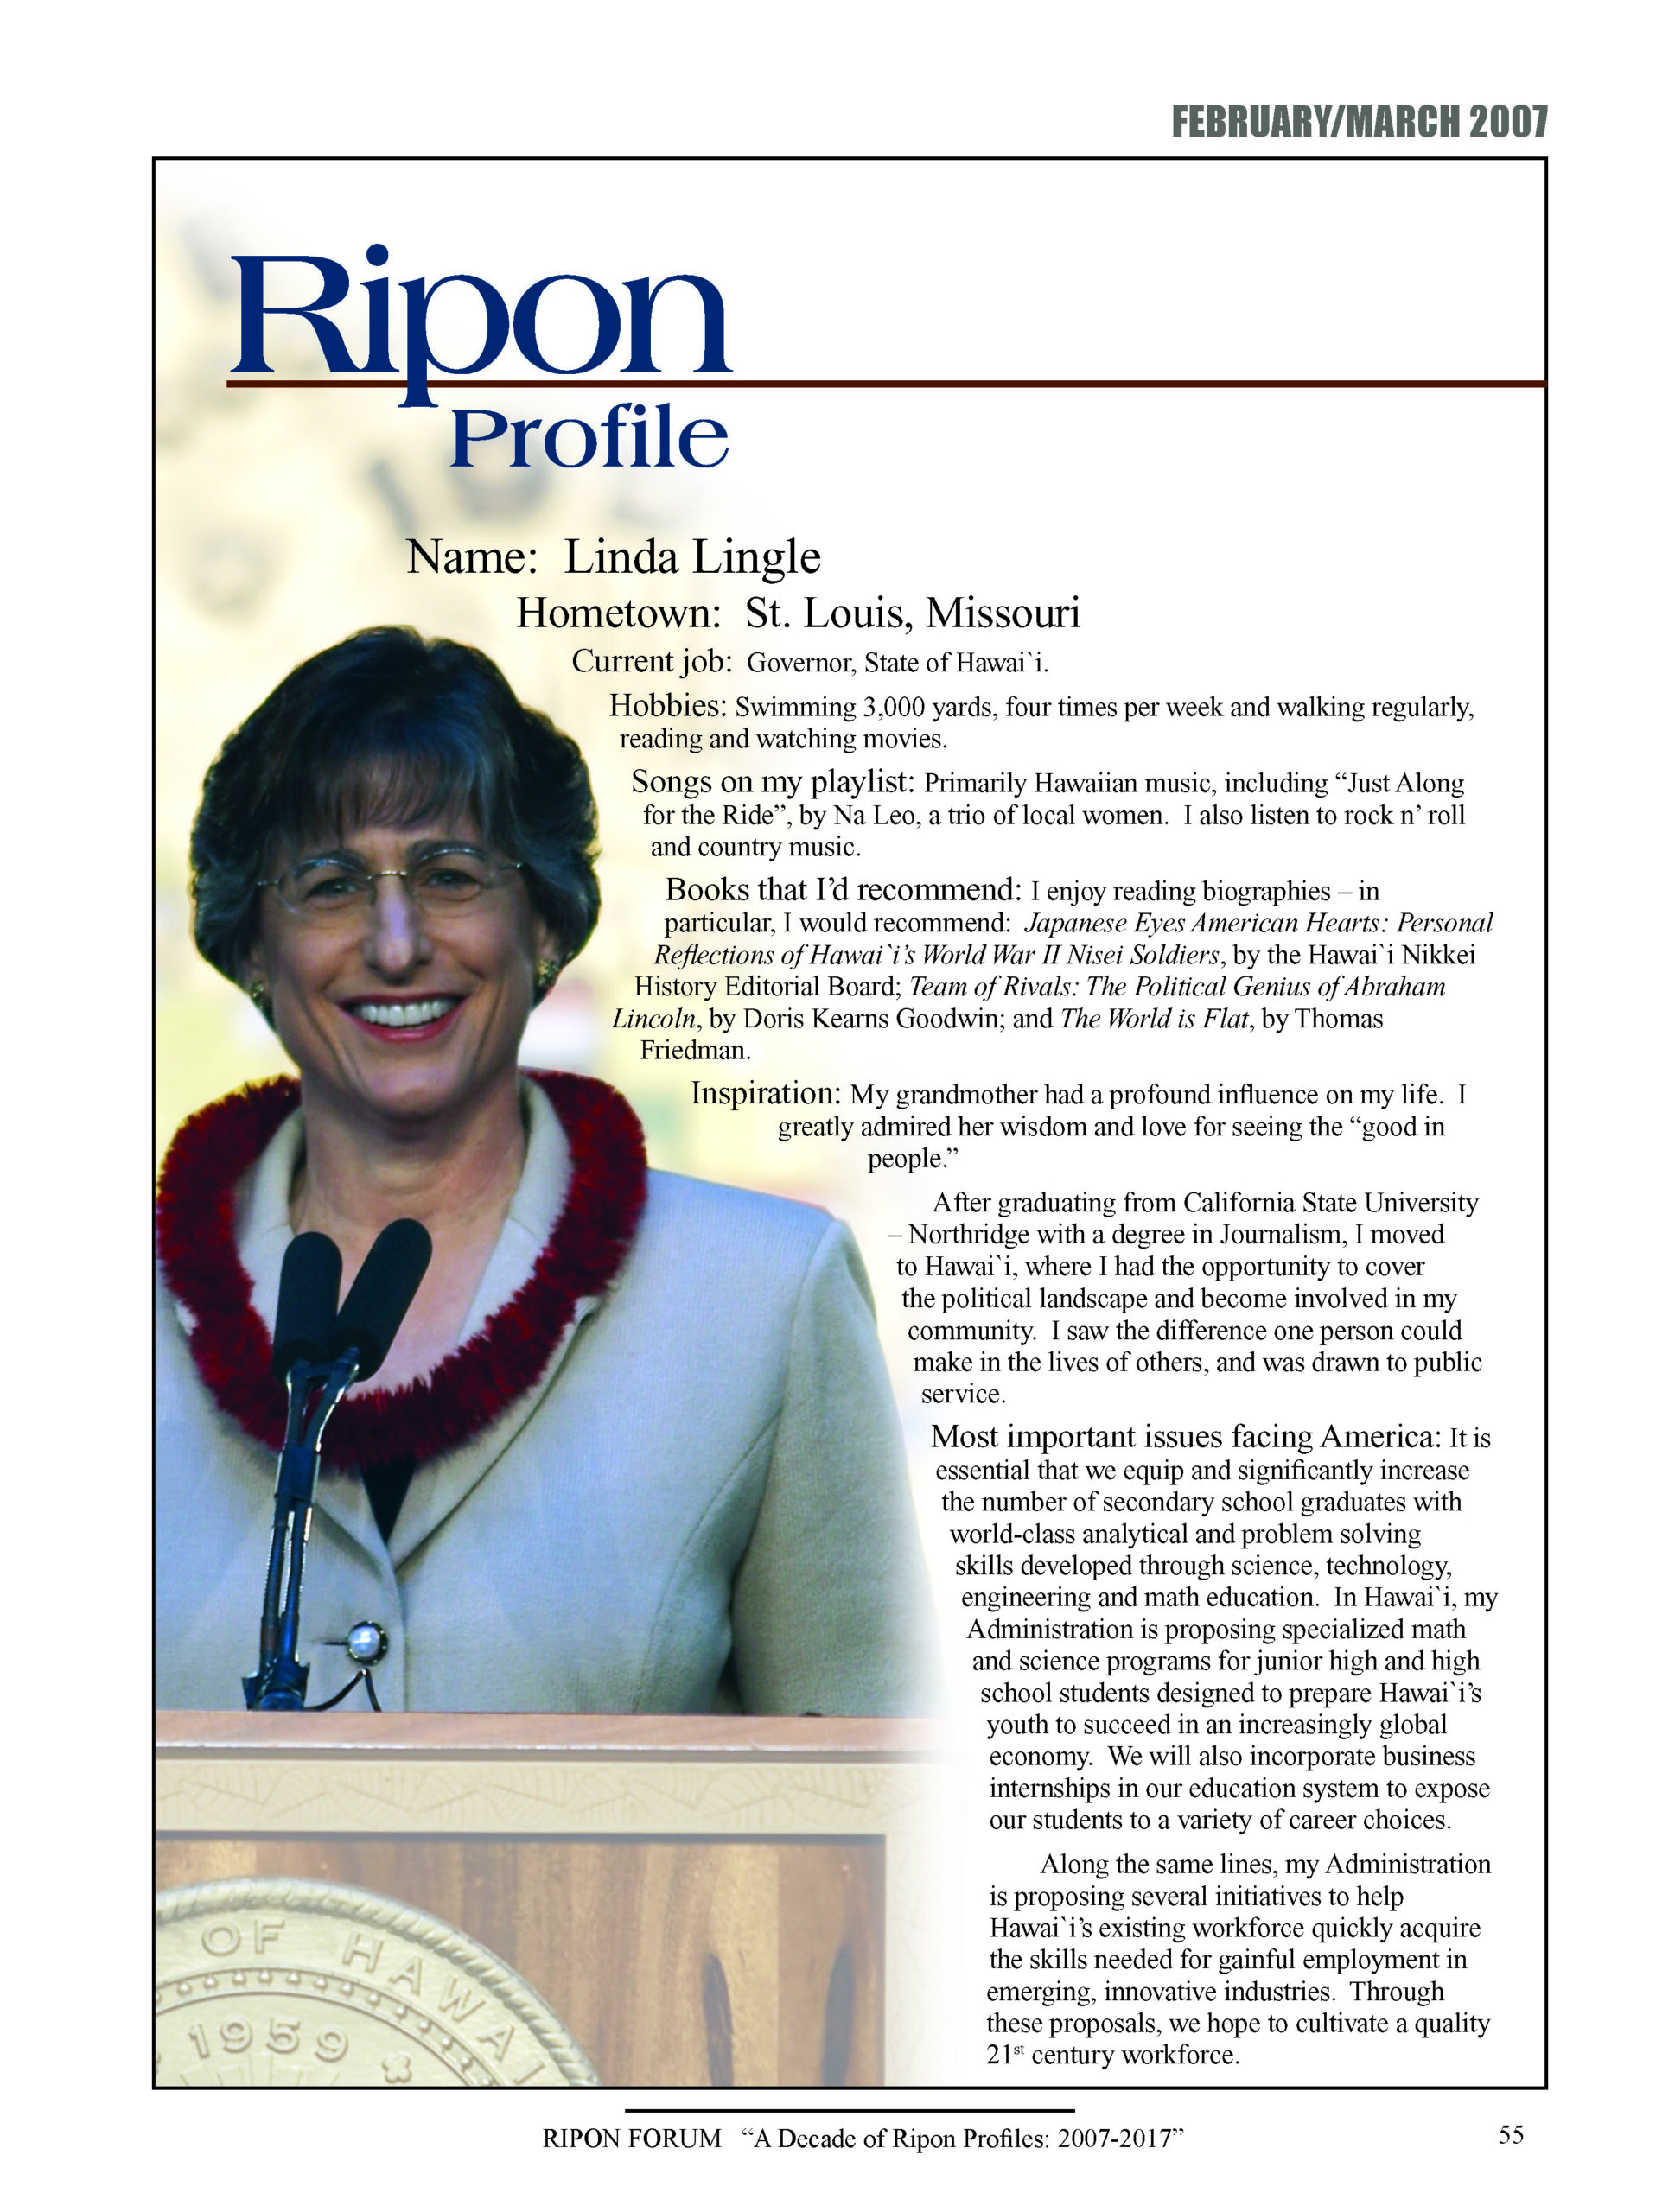 Ripon Profile of Linda Lingle